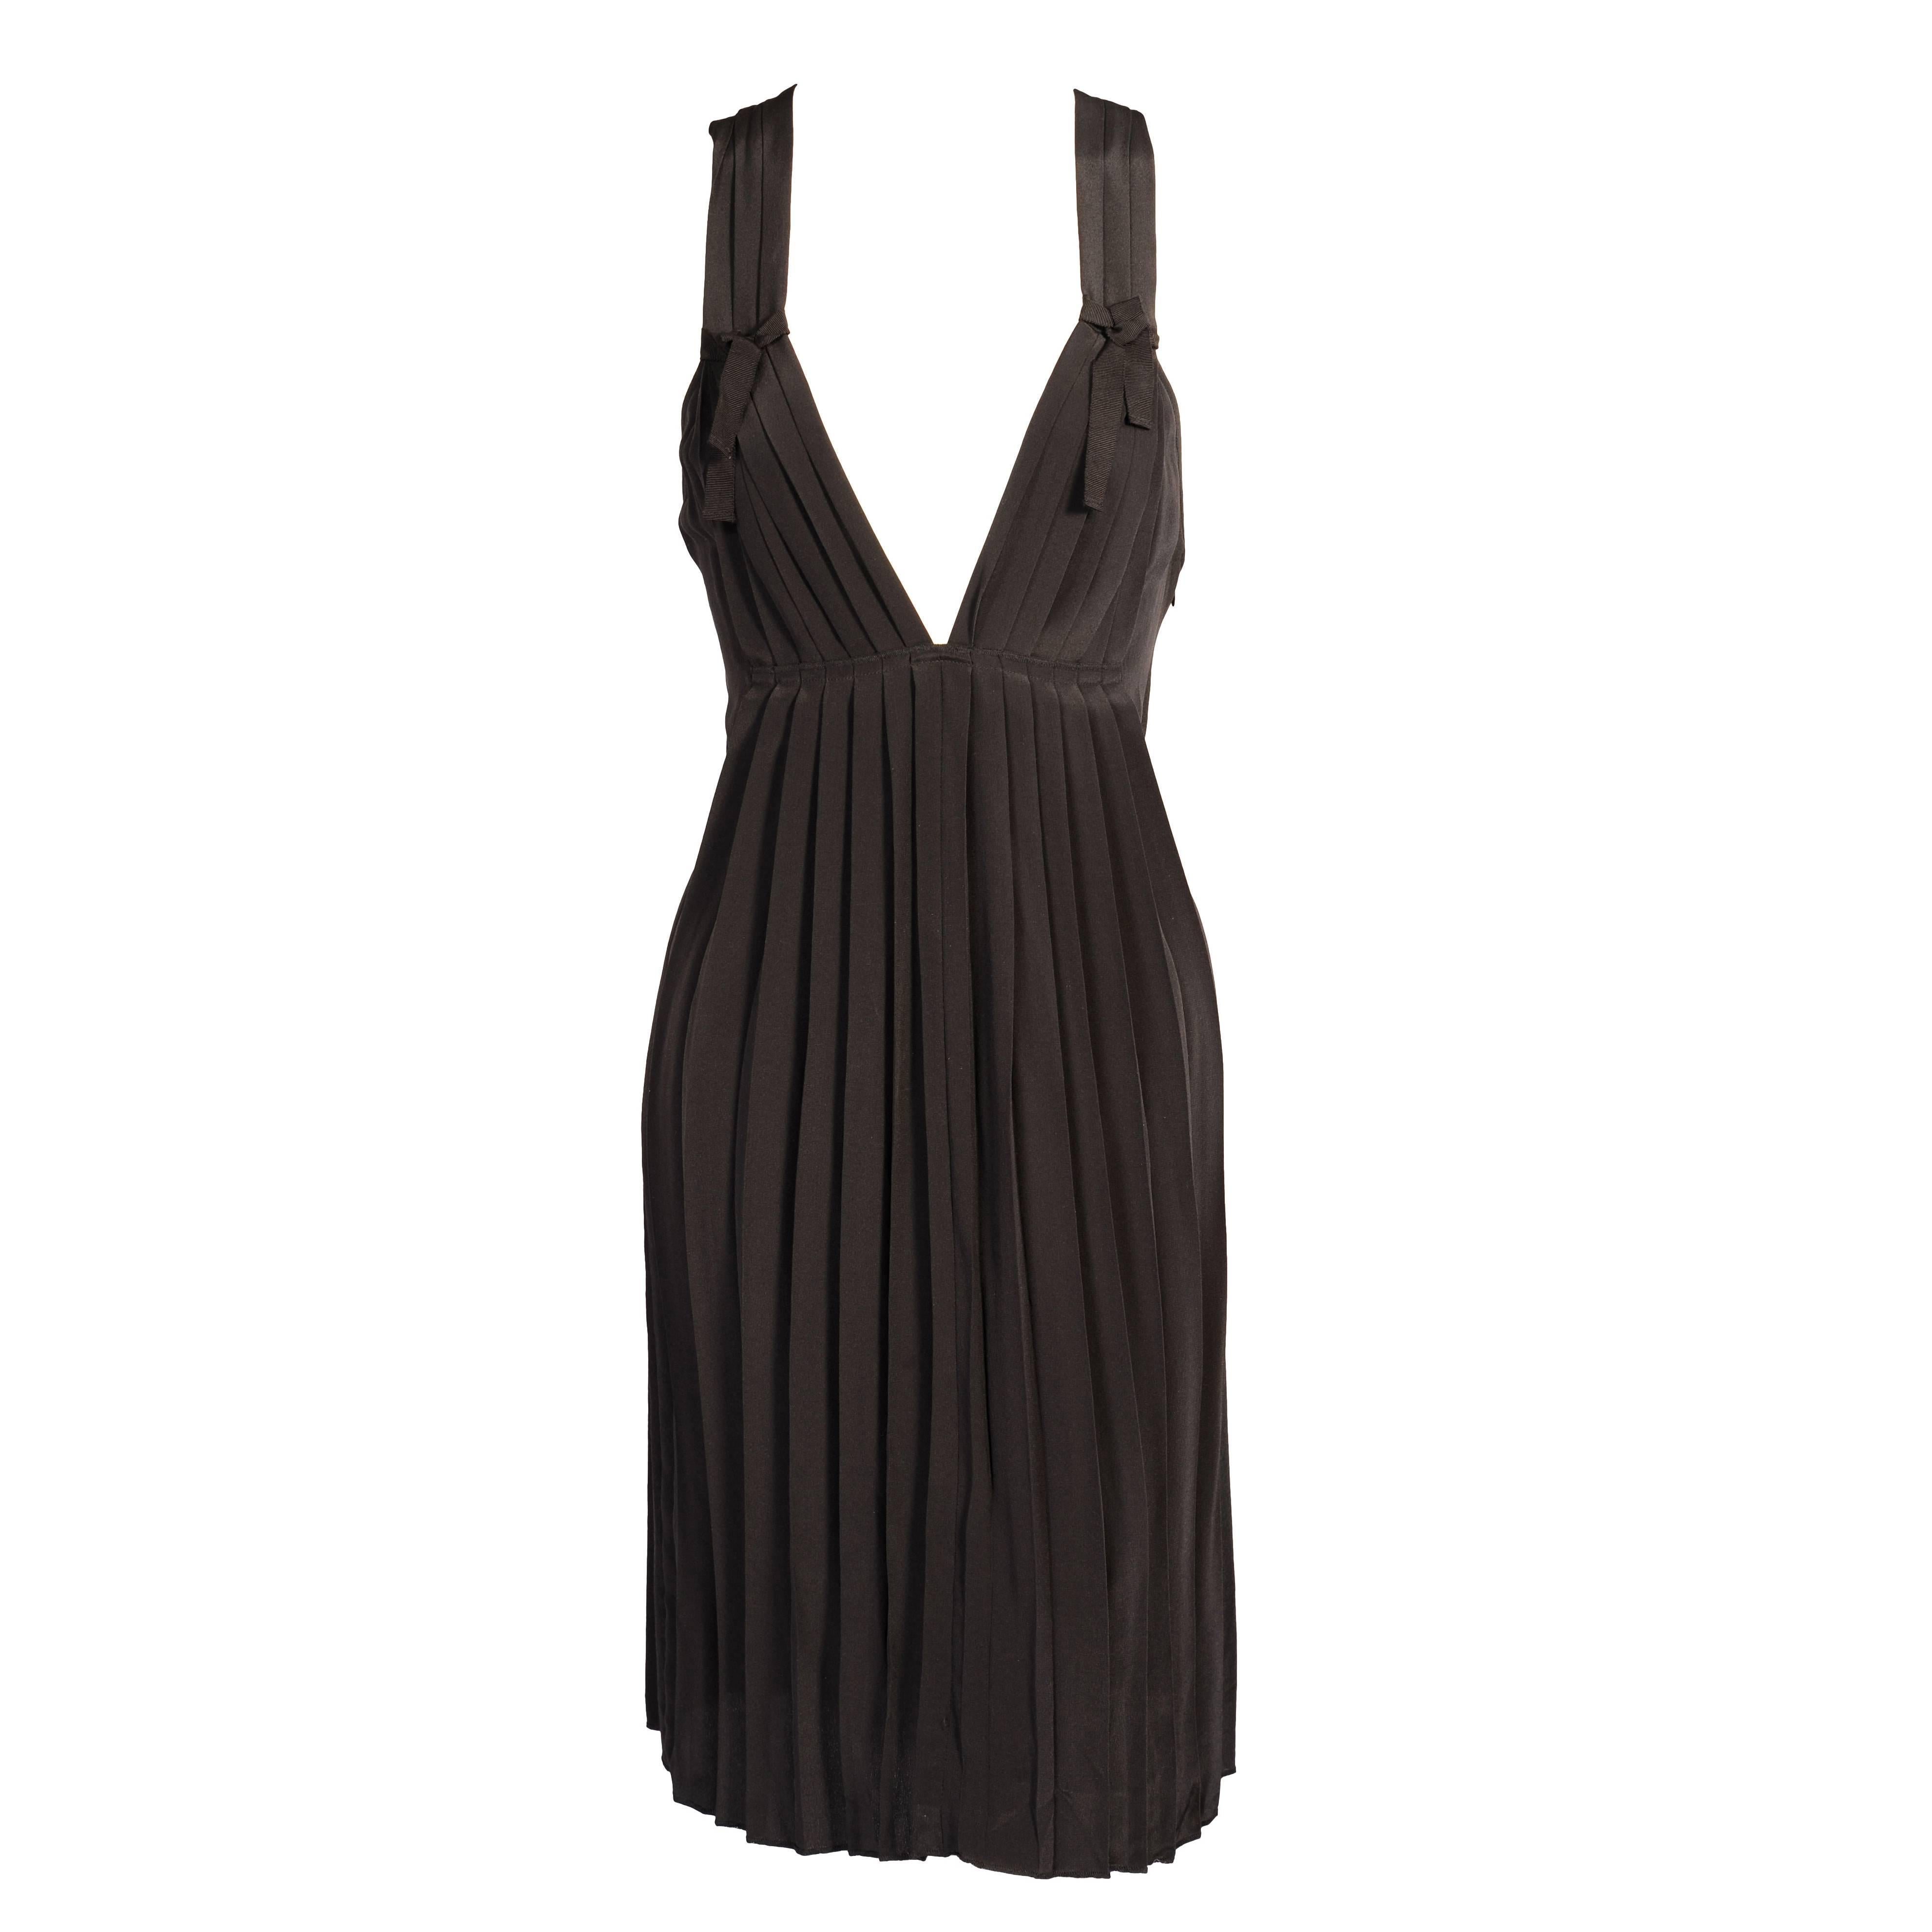 Sonia Rykiel Low Cut Black Silk Dress, Never Worn For Sale